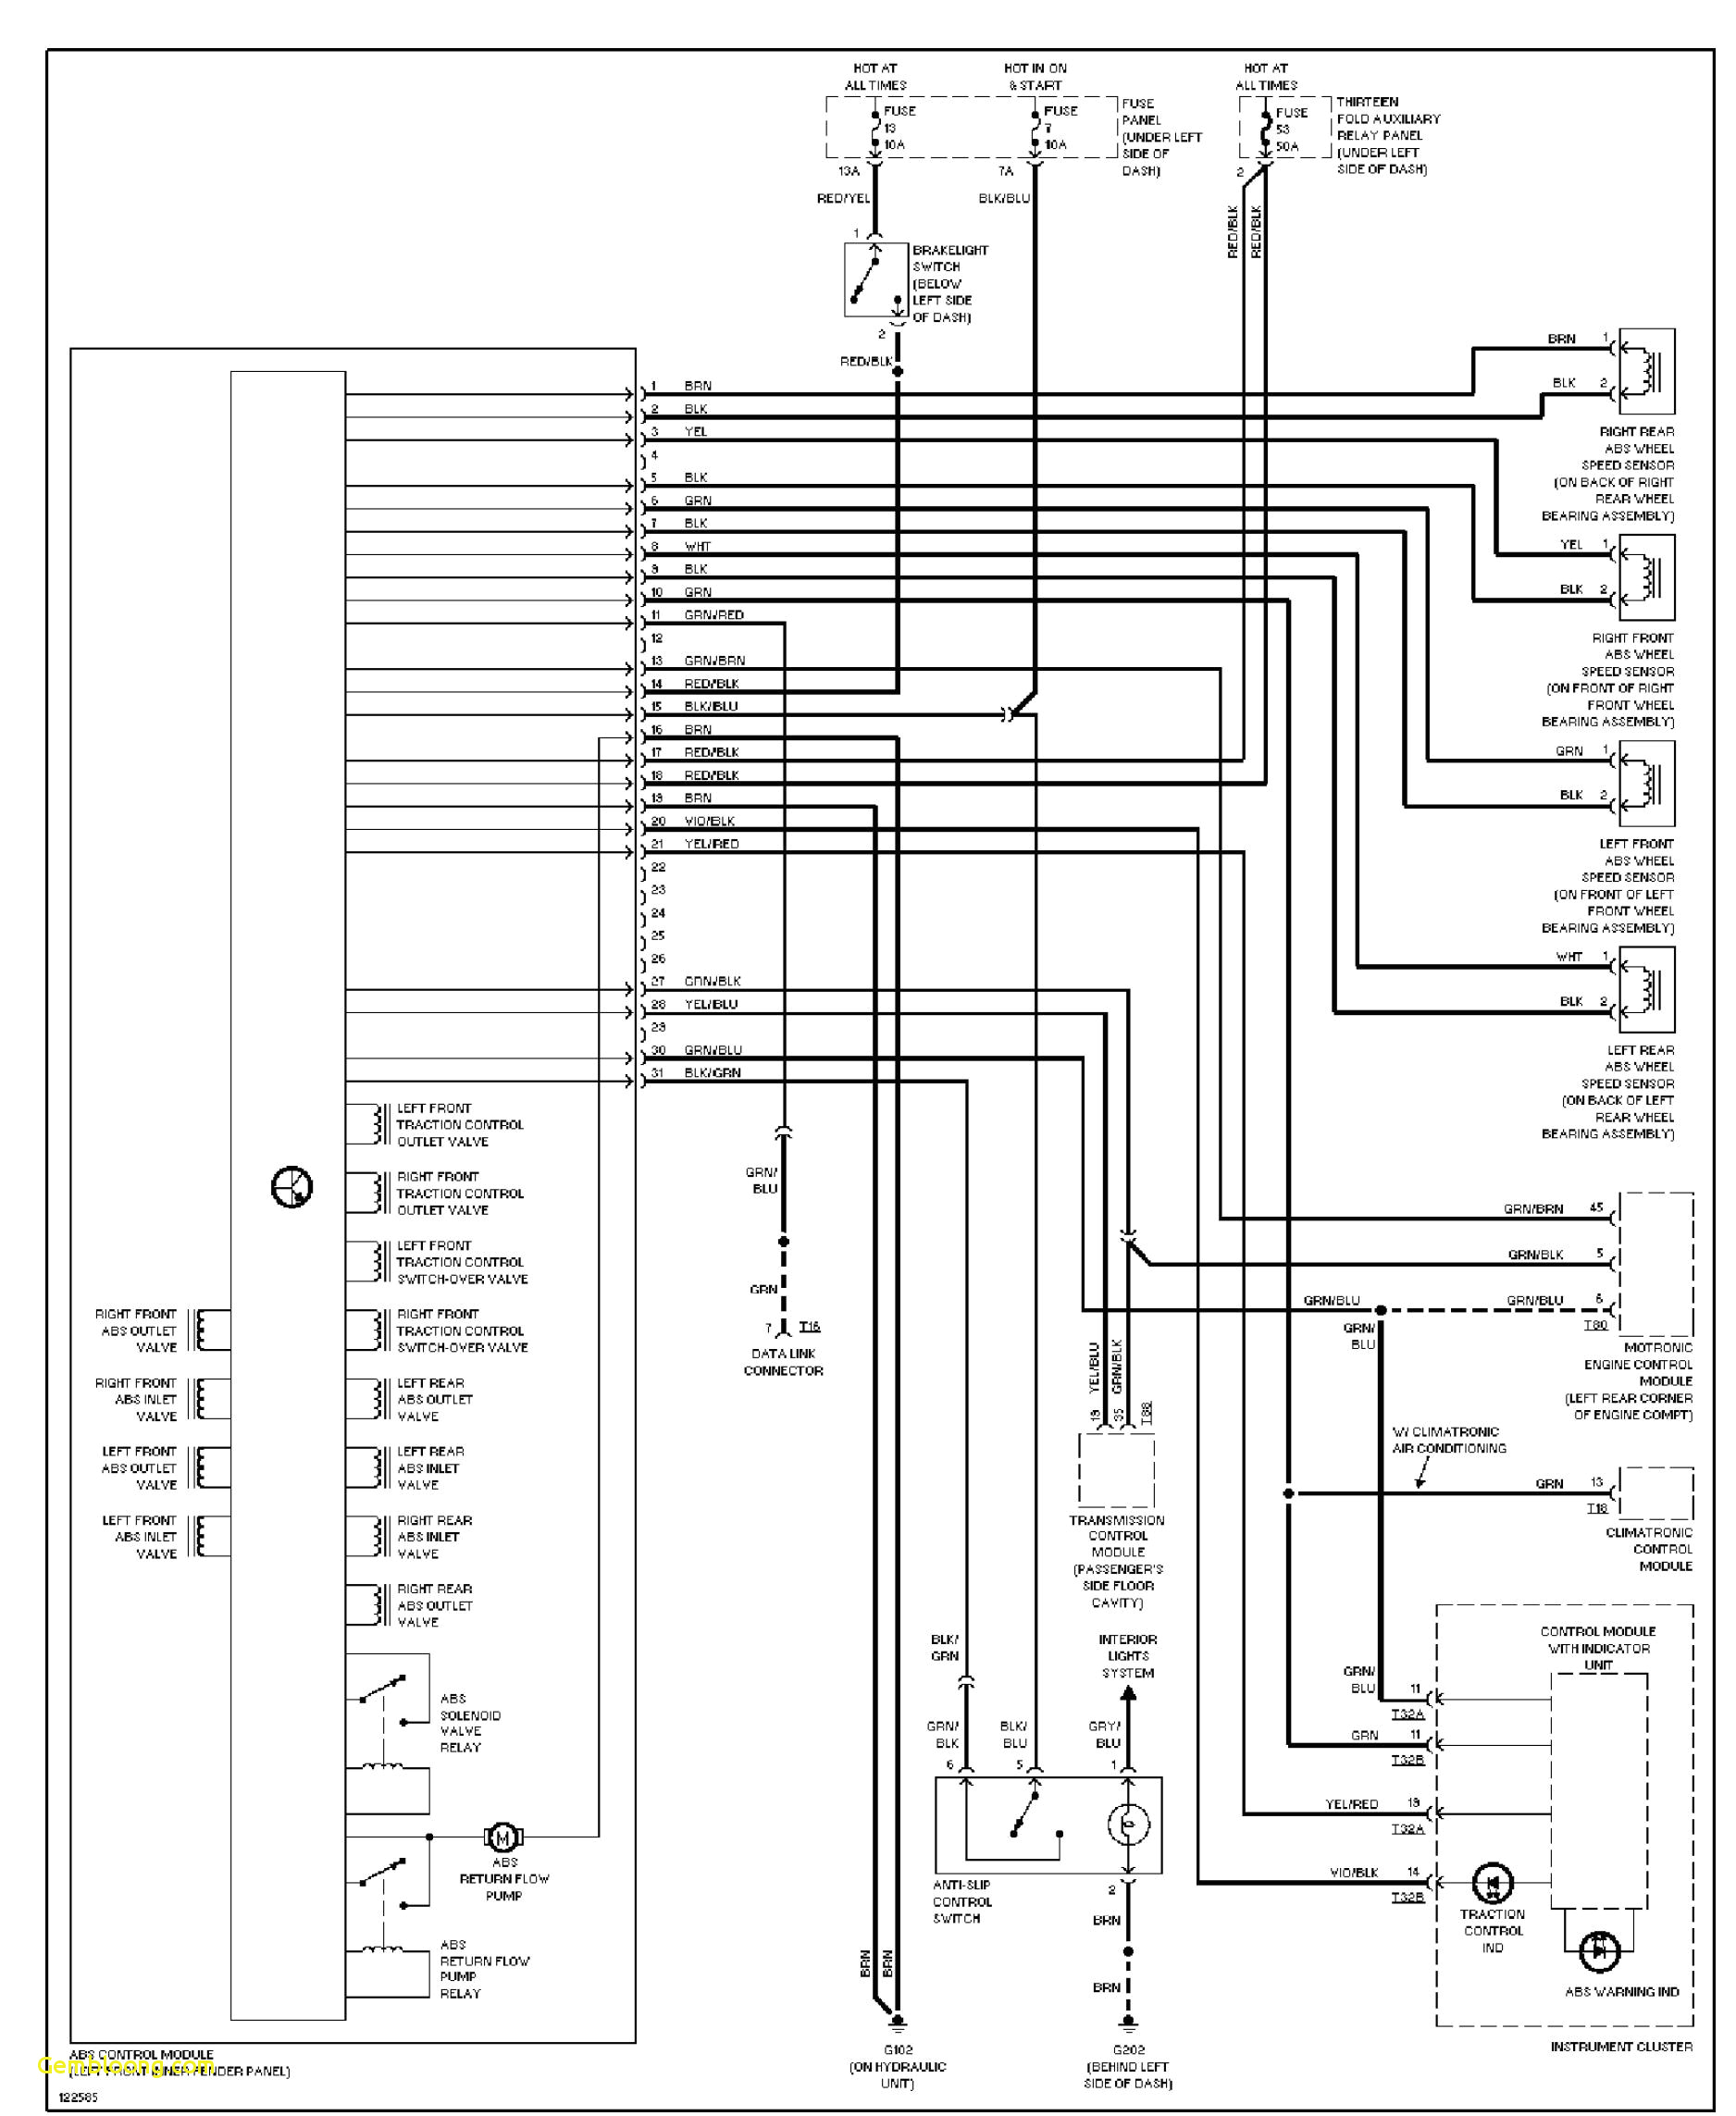 wiring diagram vw touran schema wiring diagram vw touran wiring diagram volkswagen touran wiring diagram